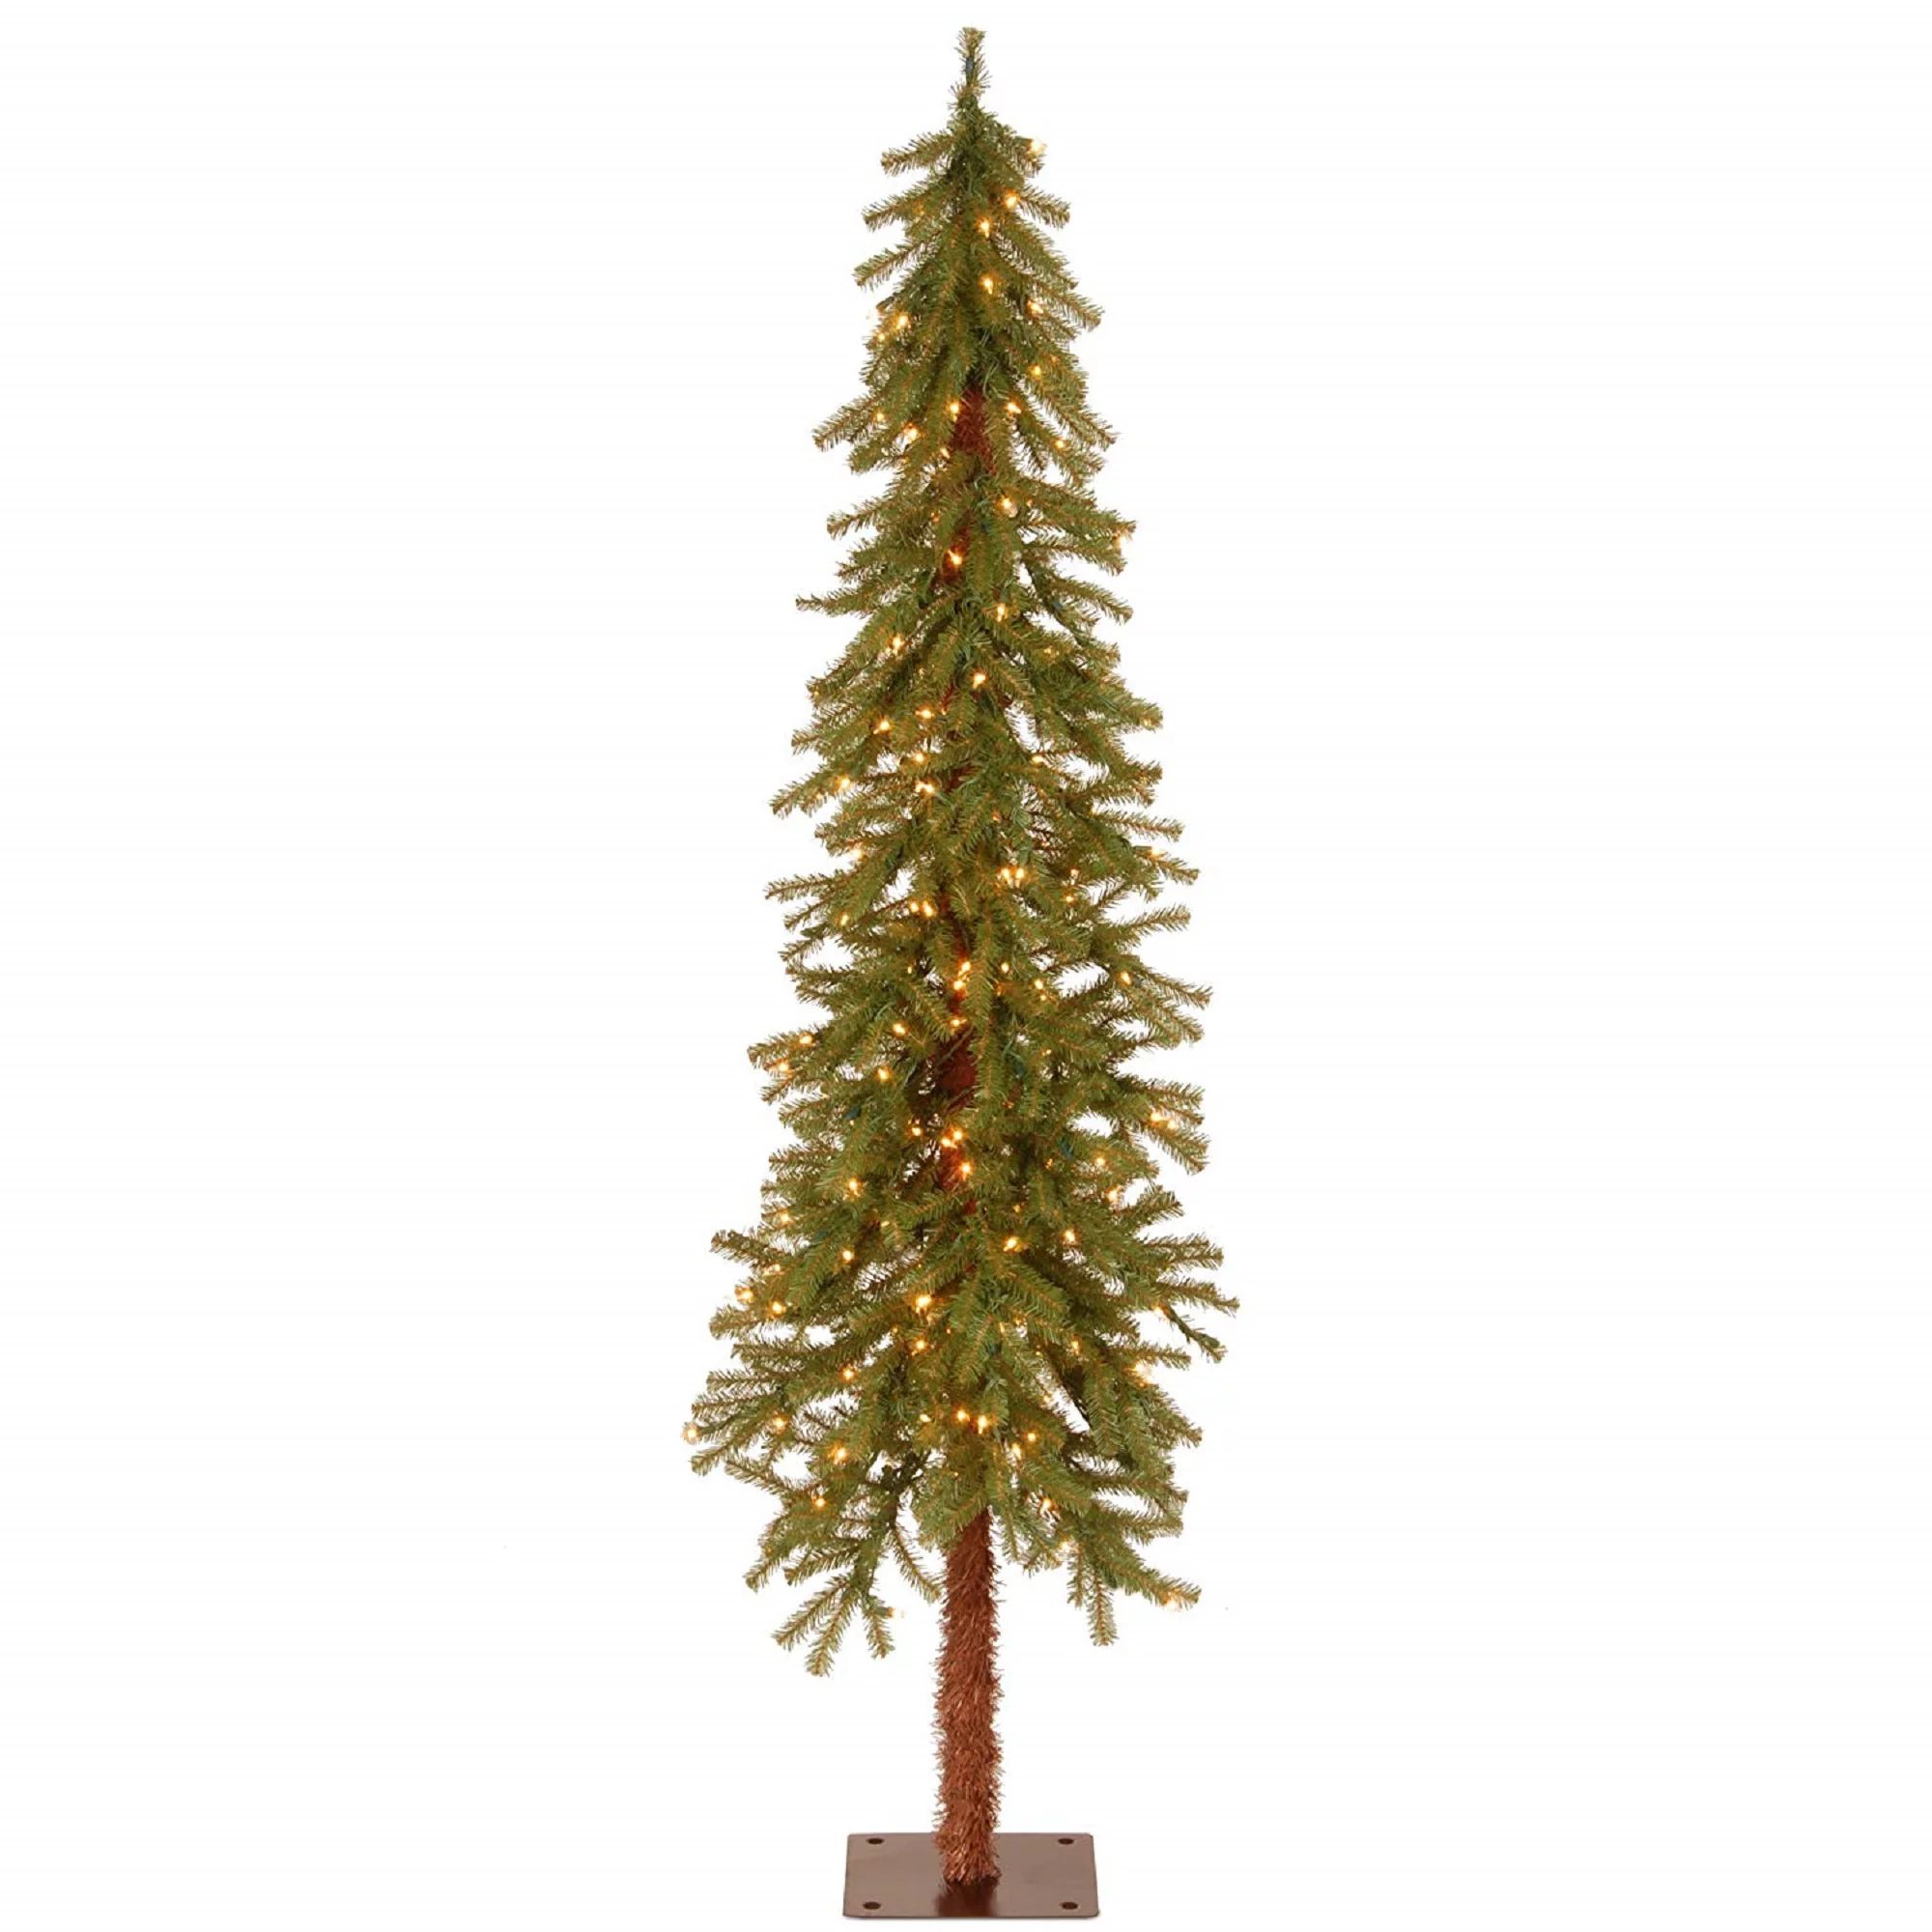 6’ Pre-Lit Hickory Cedar Artificial Christmas Tree - Clear Lights | Walmart (US)